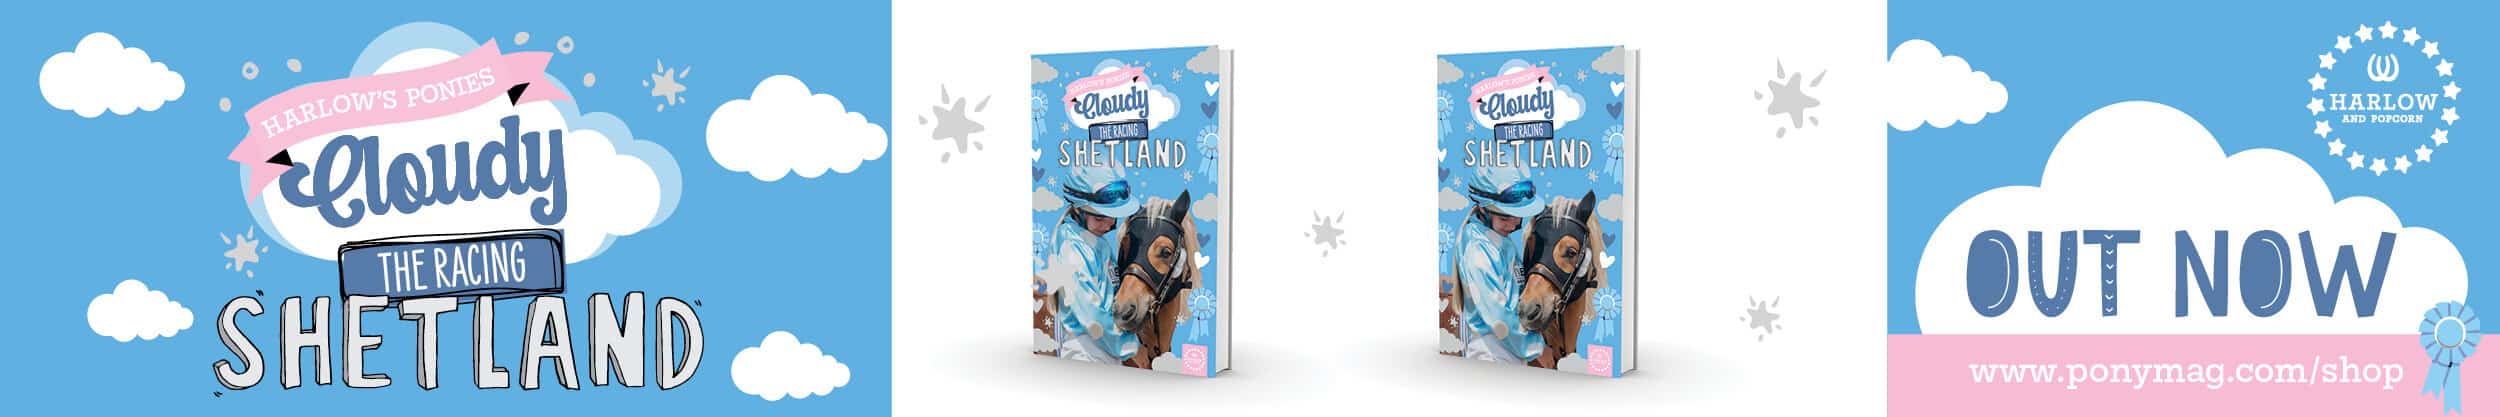 Harlow's ponies: Cloudy the Racing Shetland book